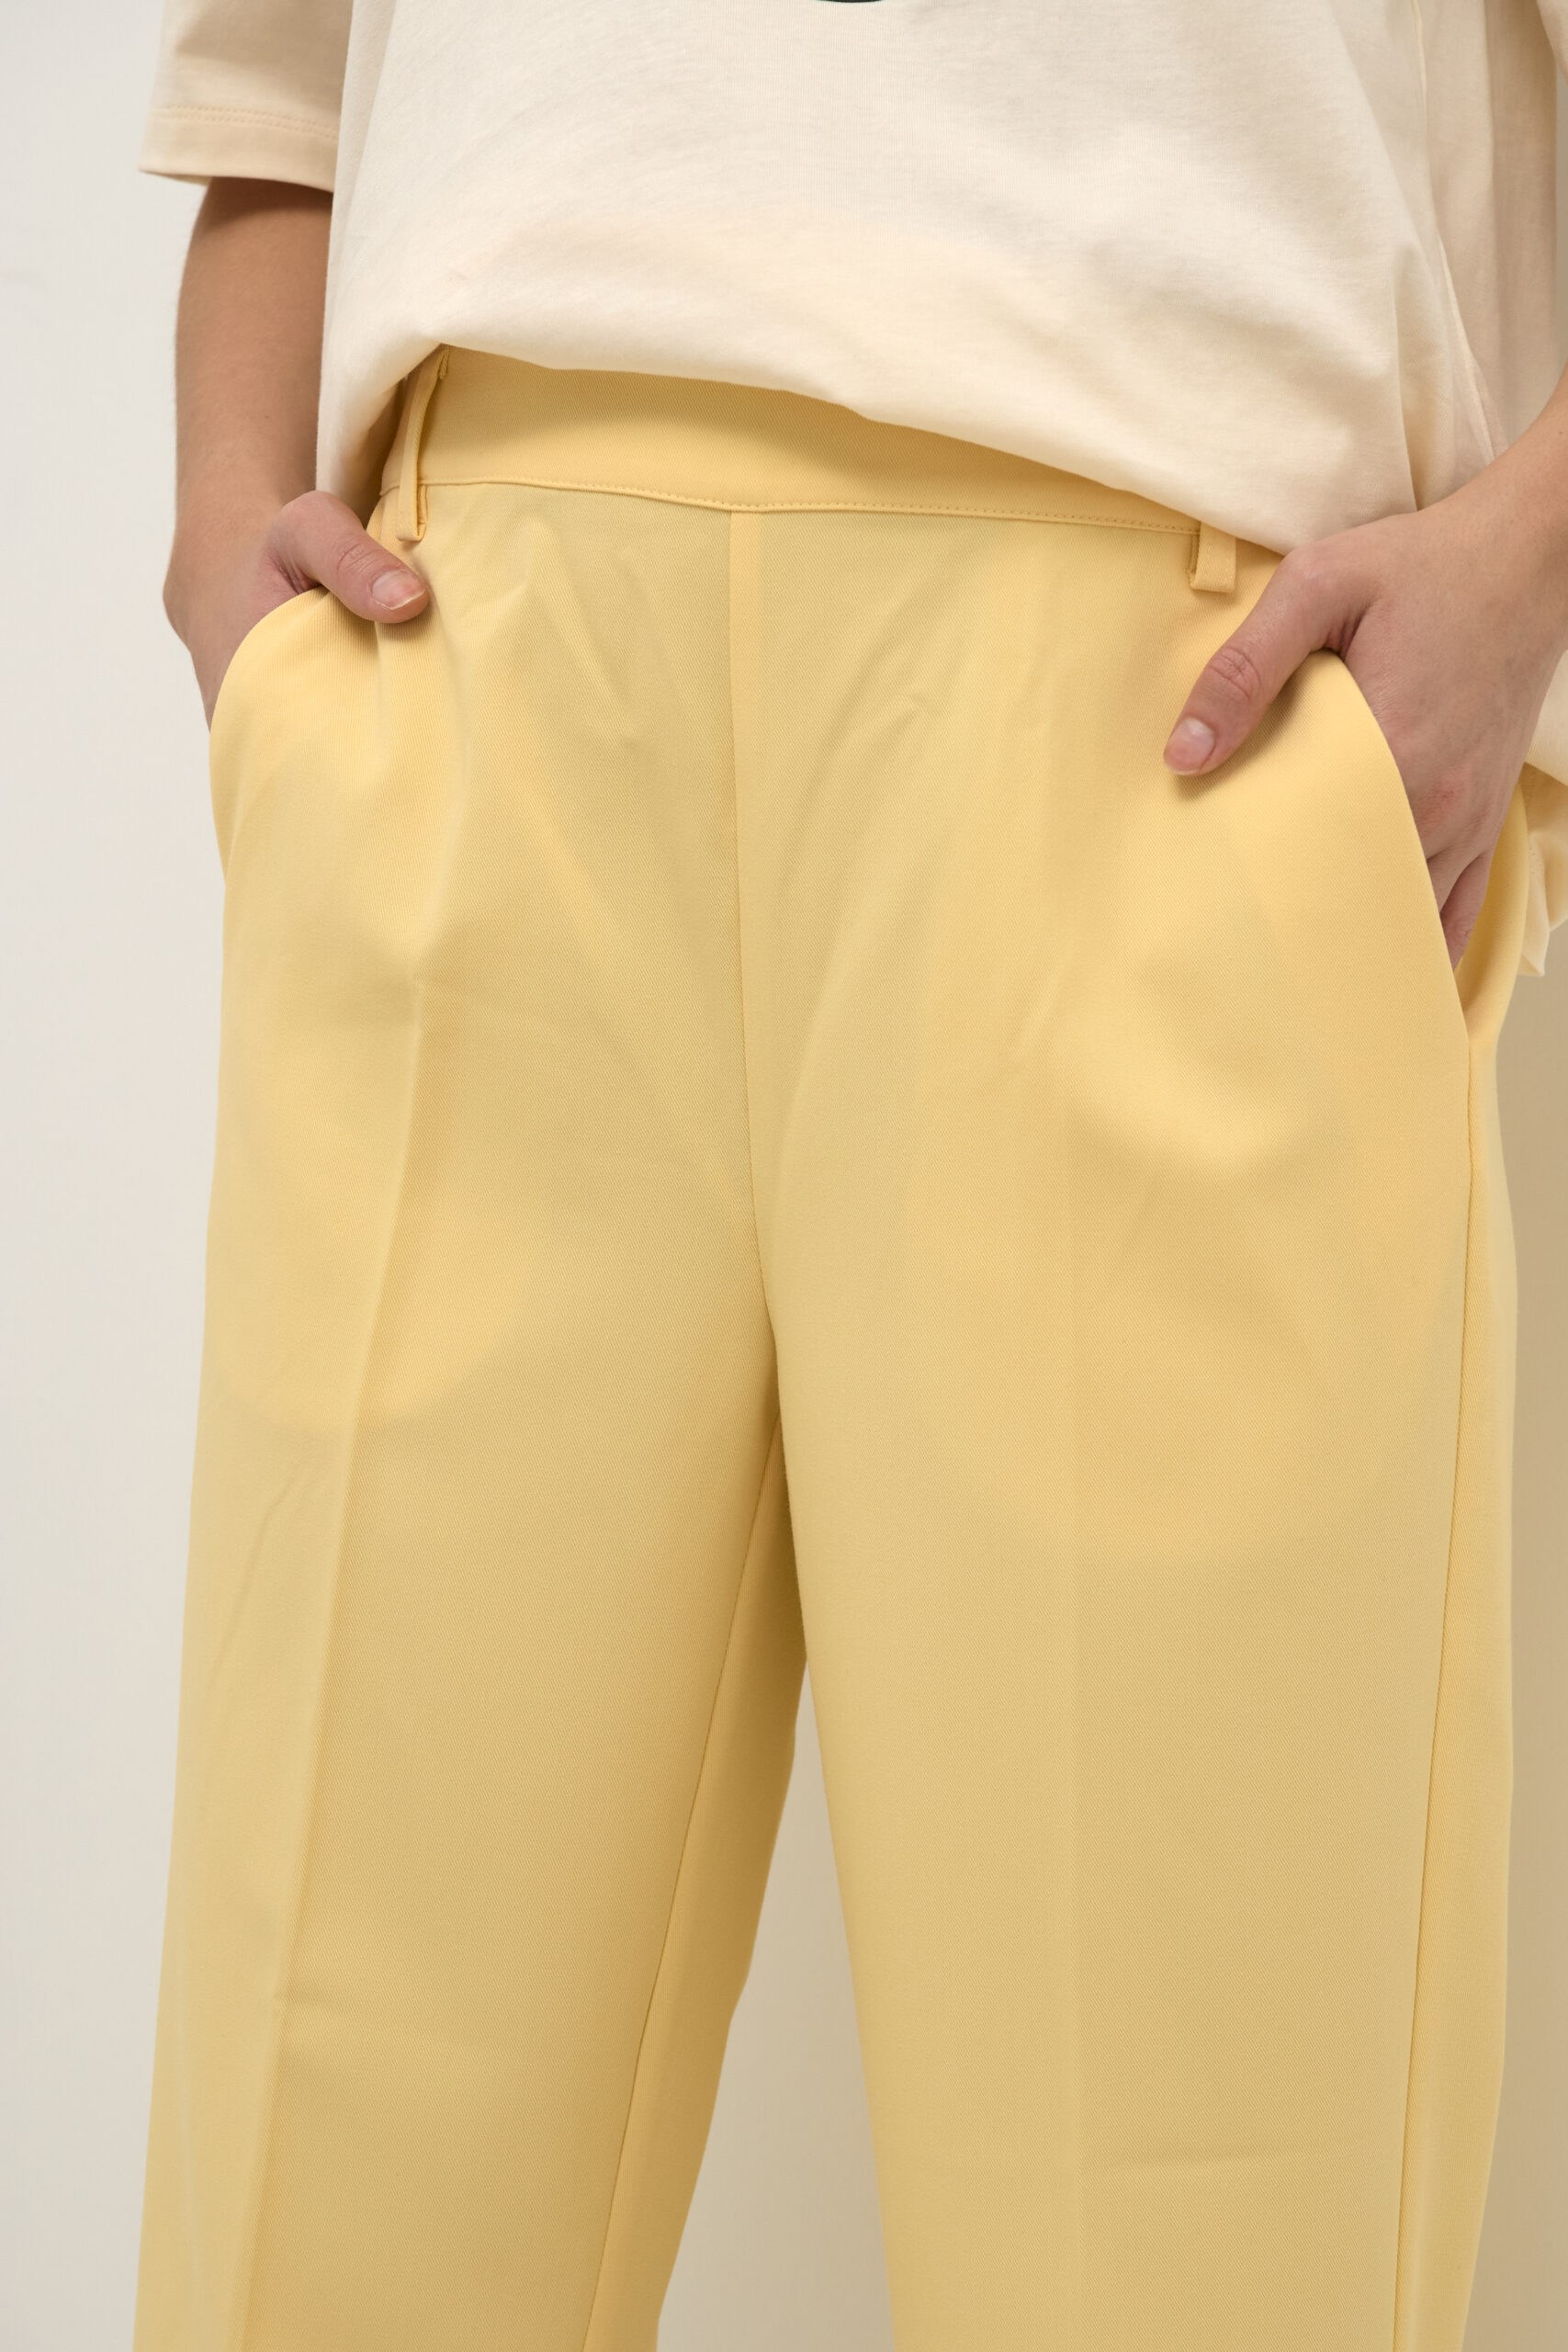 KAsakura HW Cropped Pants closeup